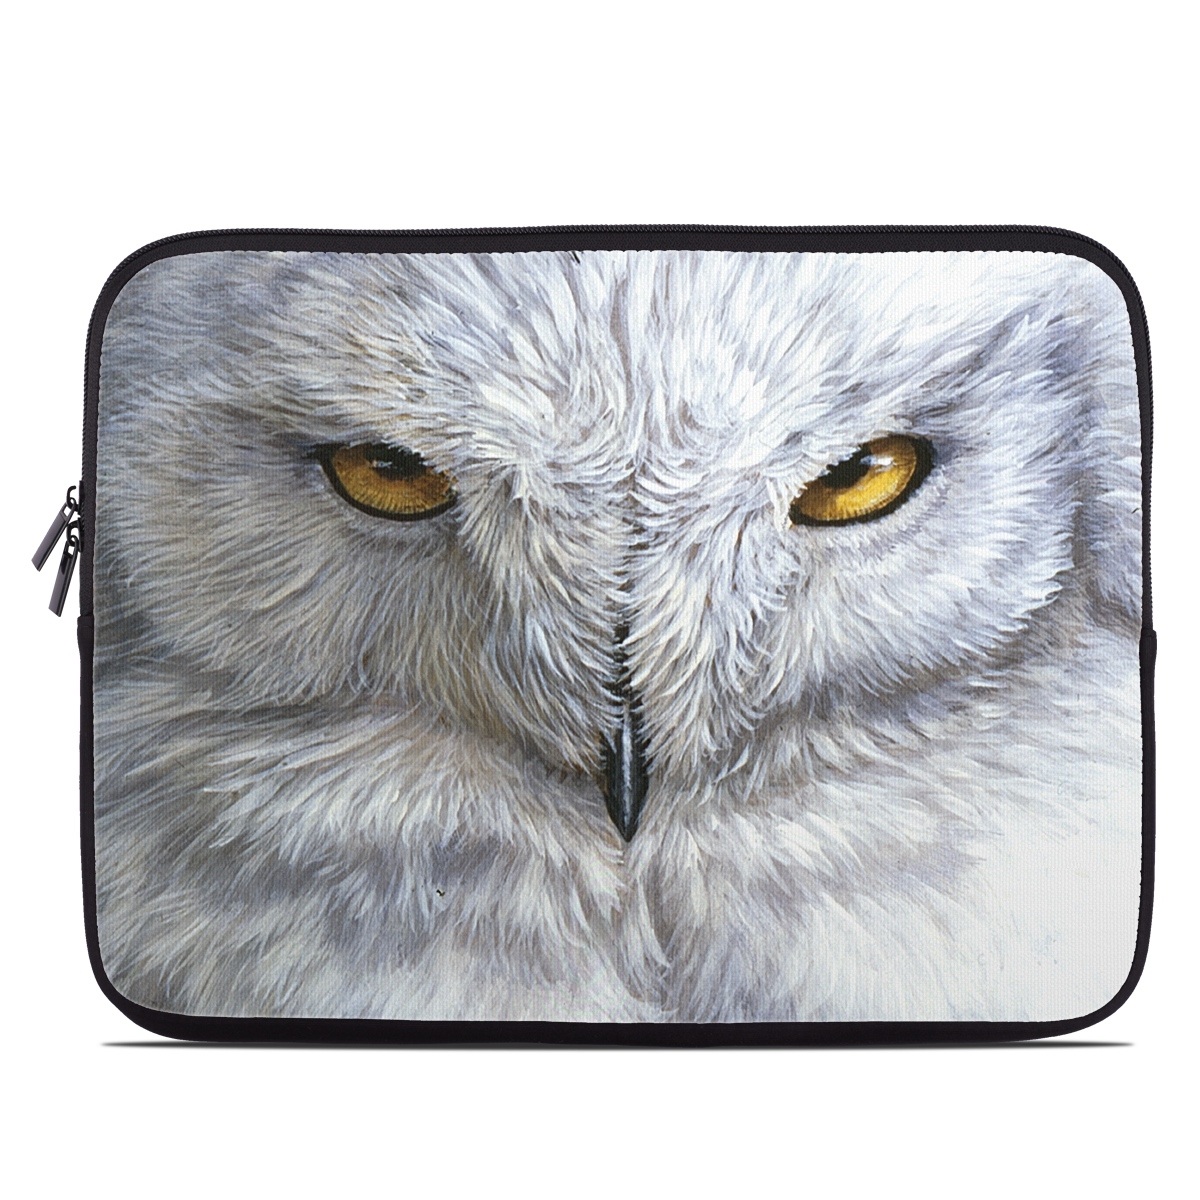 Laptop Sleeve - Snowy Owl (Image 1)